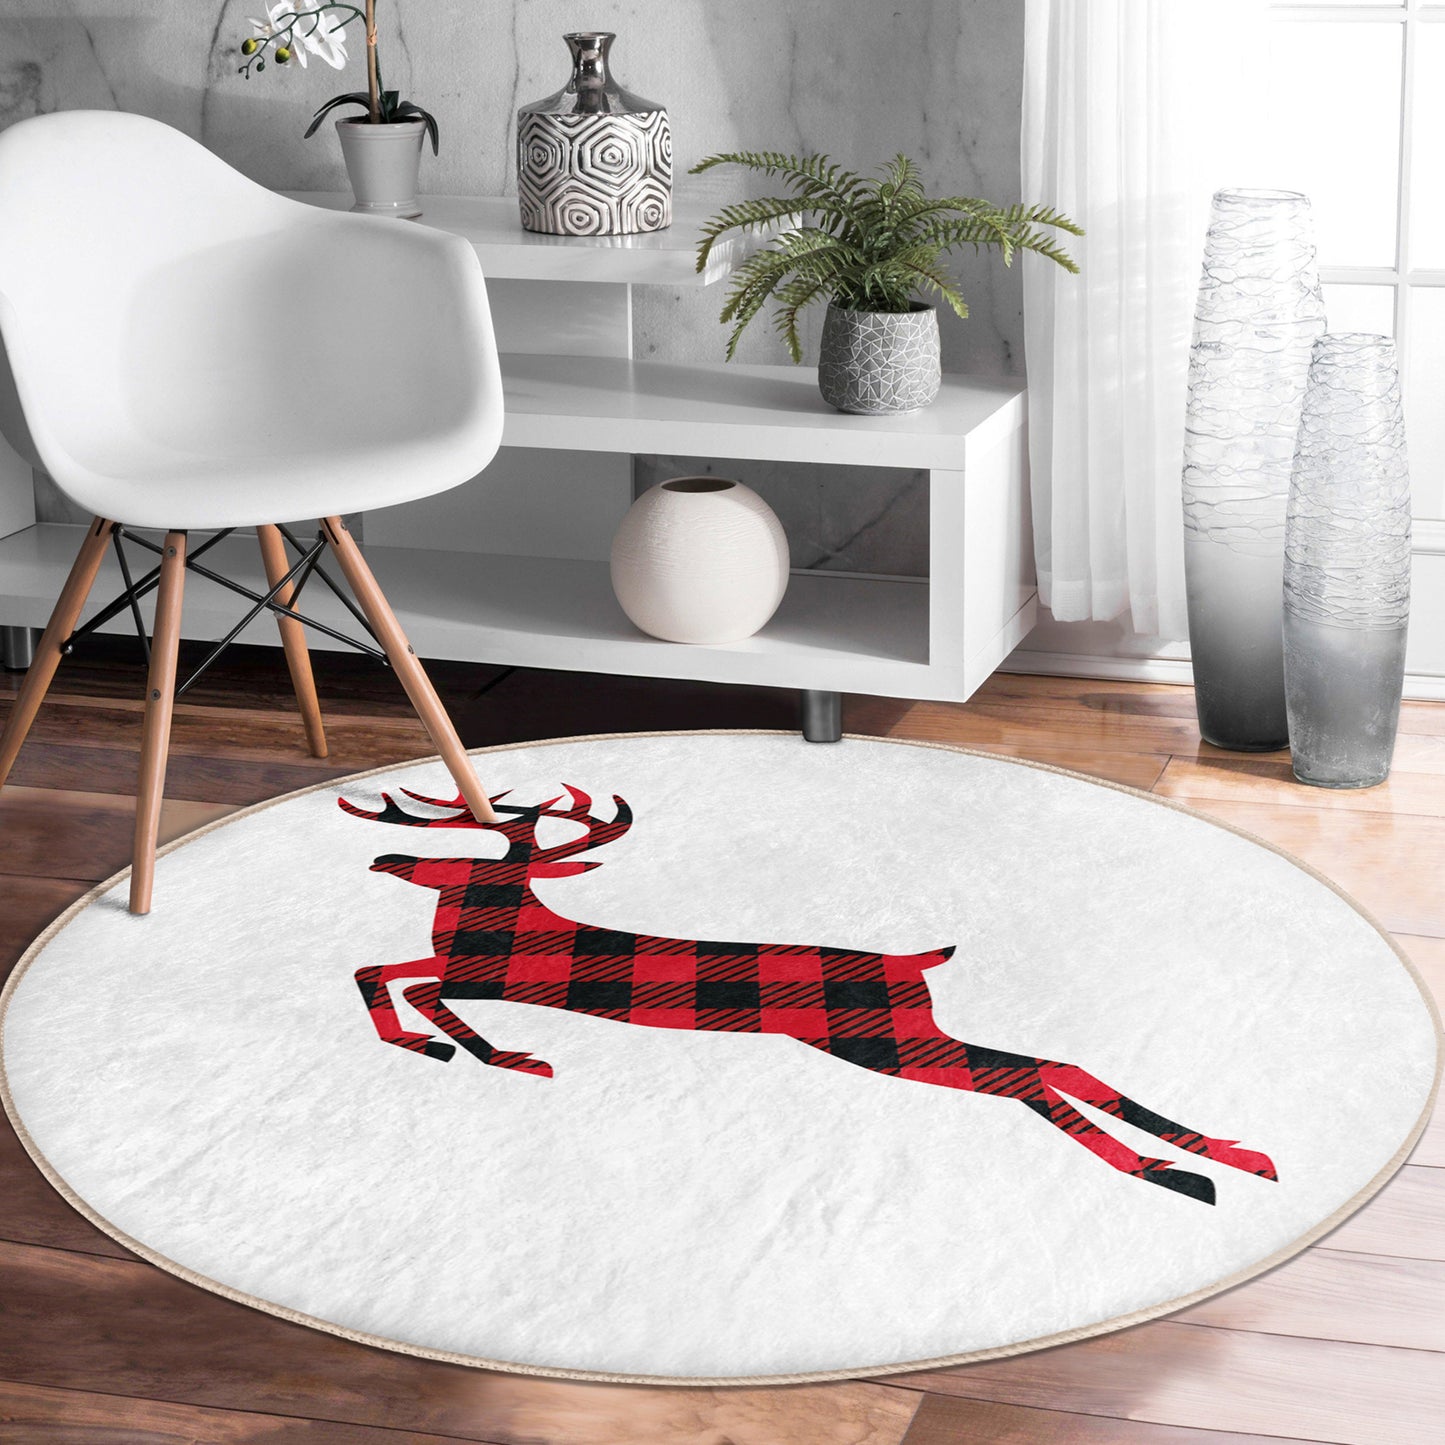 Artistic Red Deer Design Decorative Rug - Seasonal Elegance